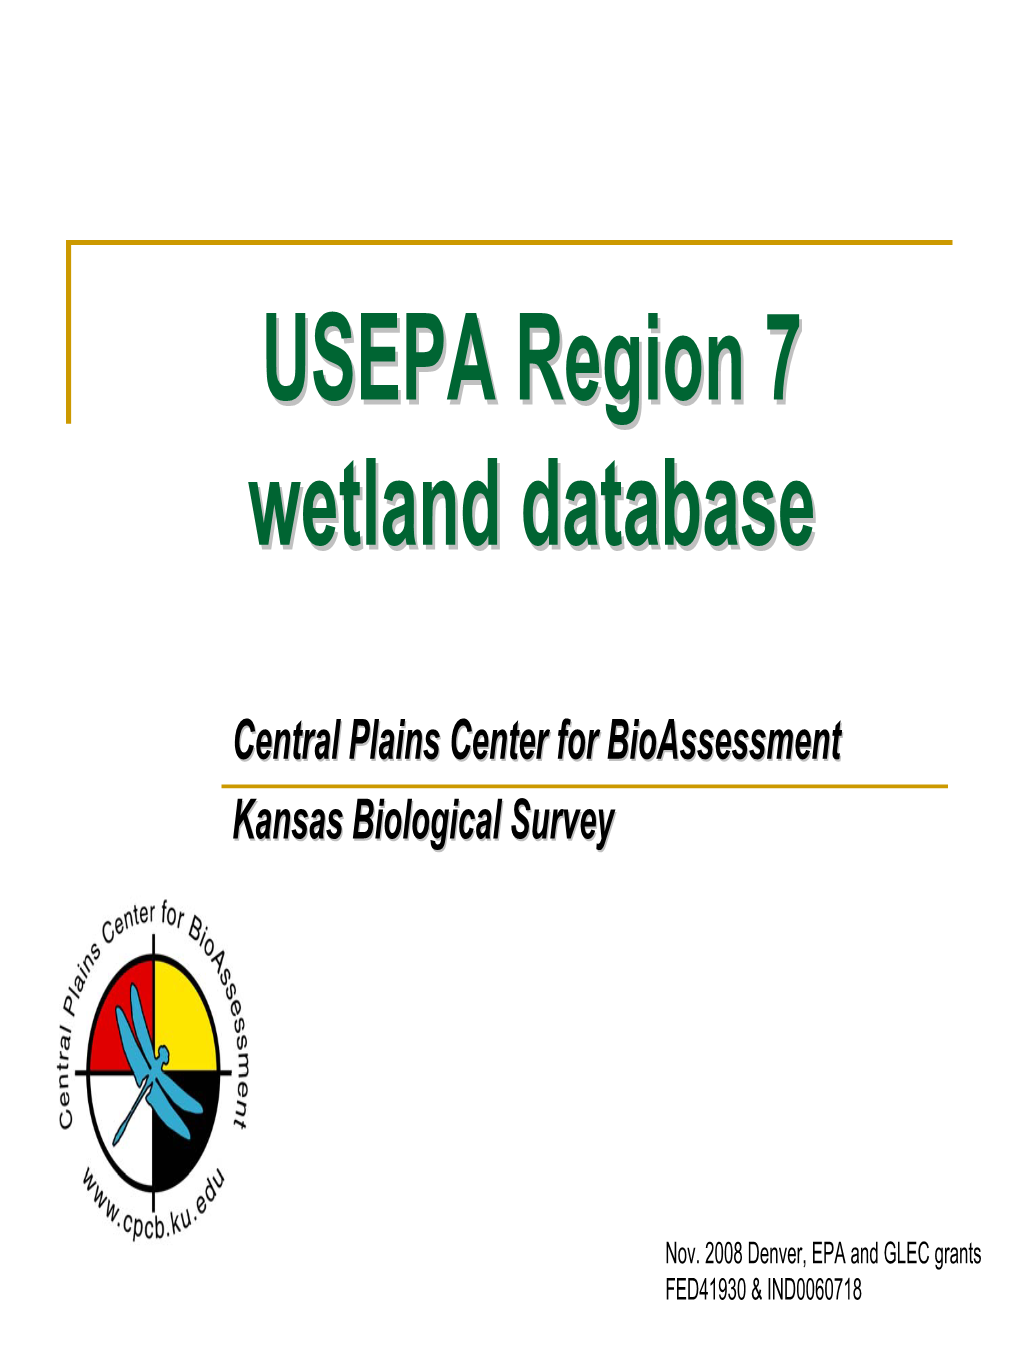 USEPA Region 7 Wetland Database